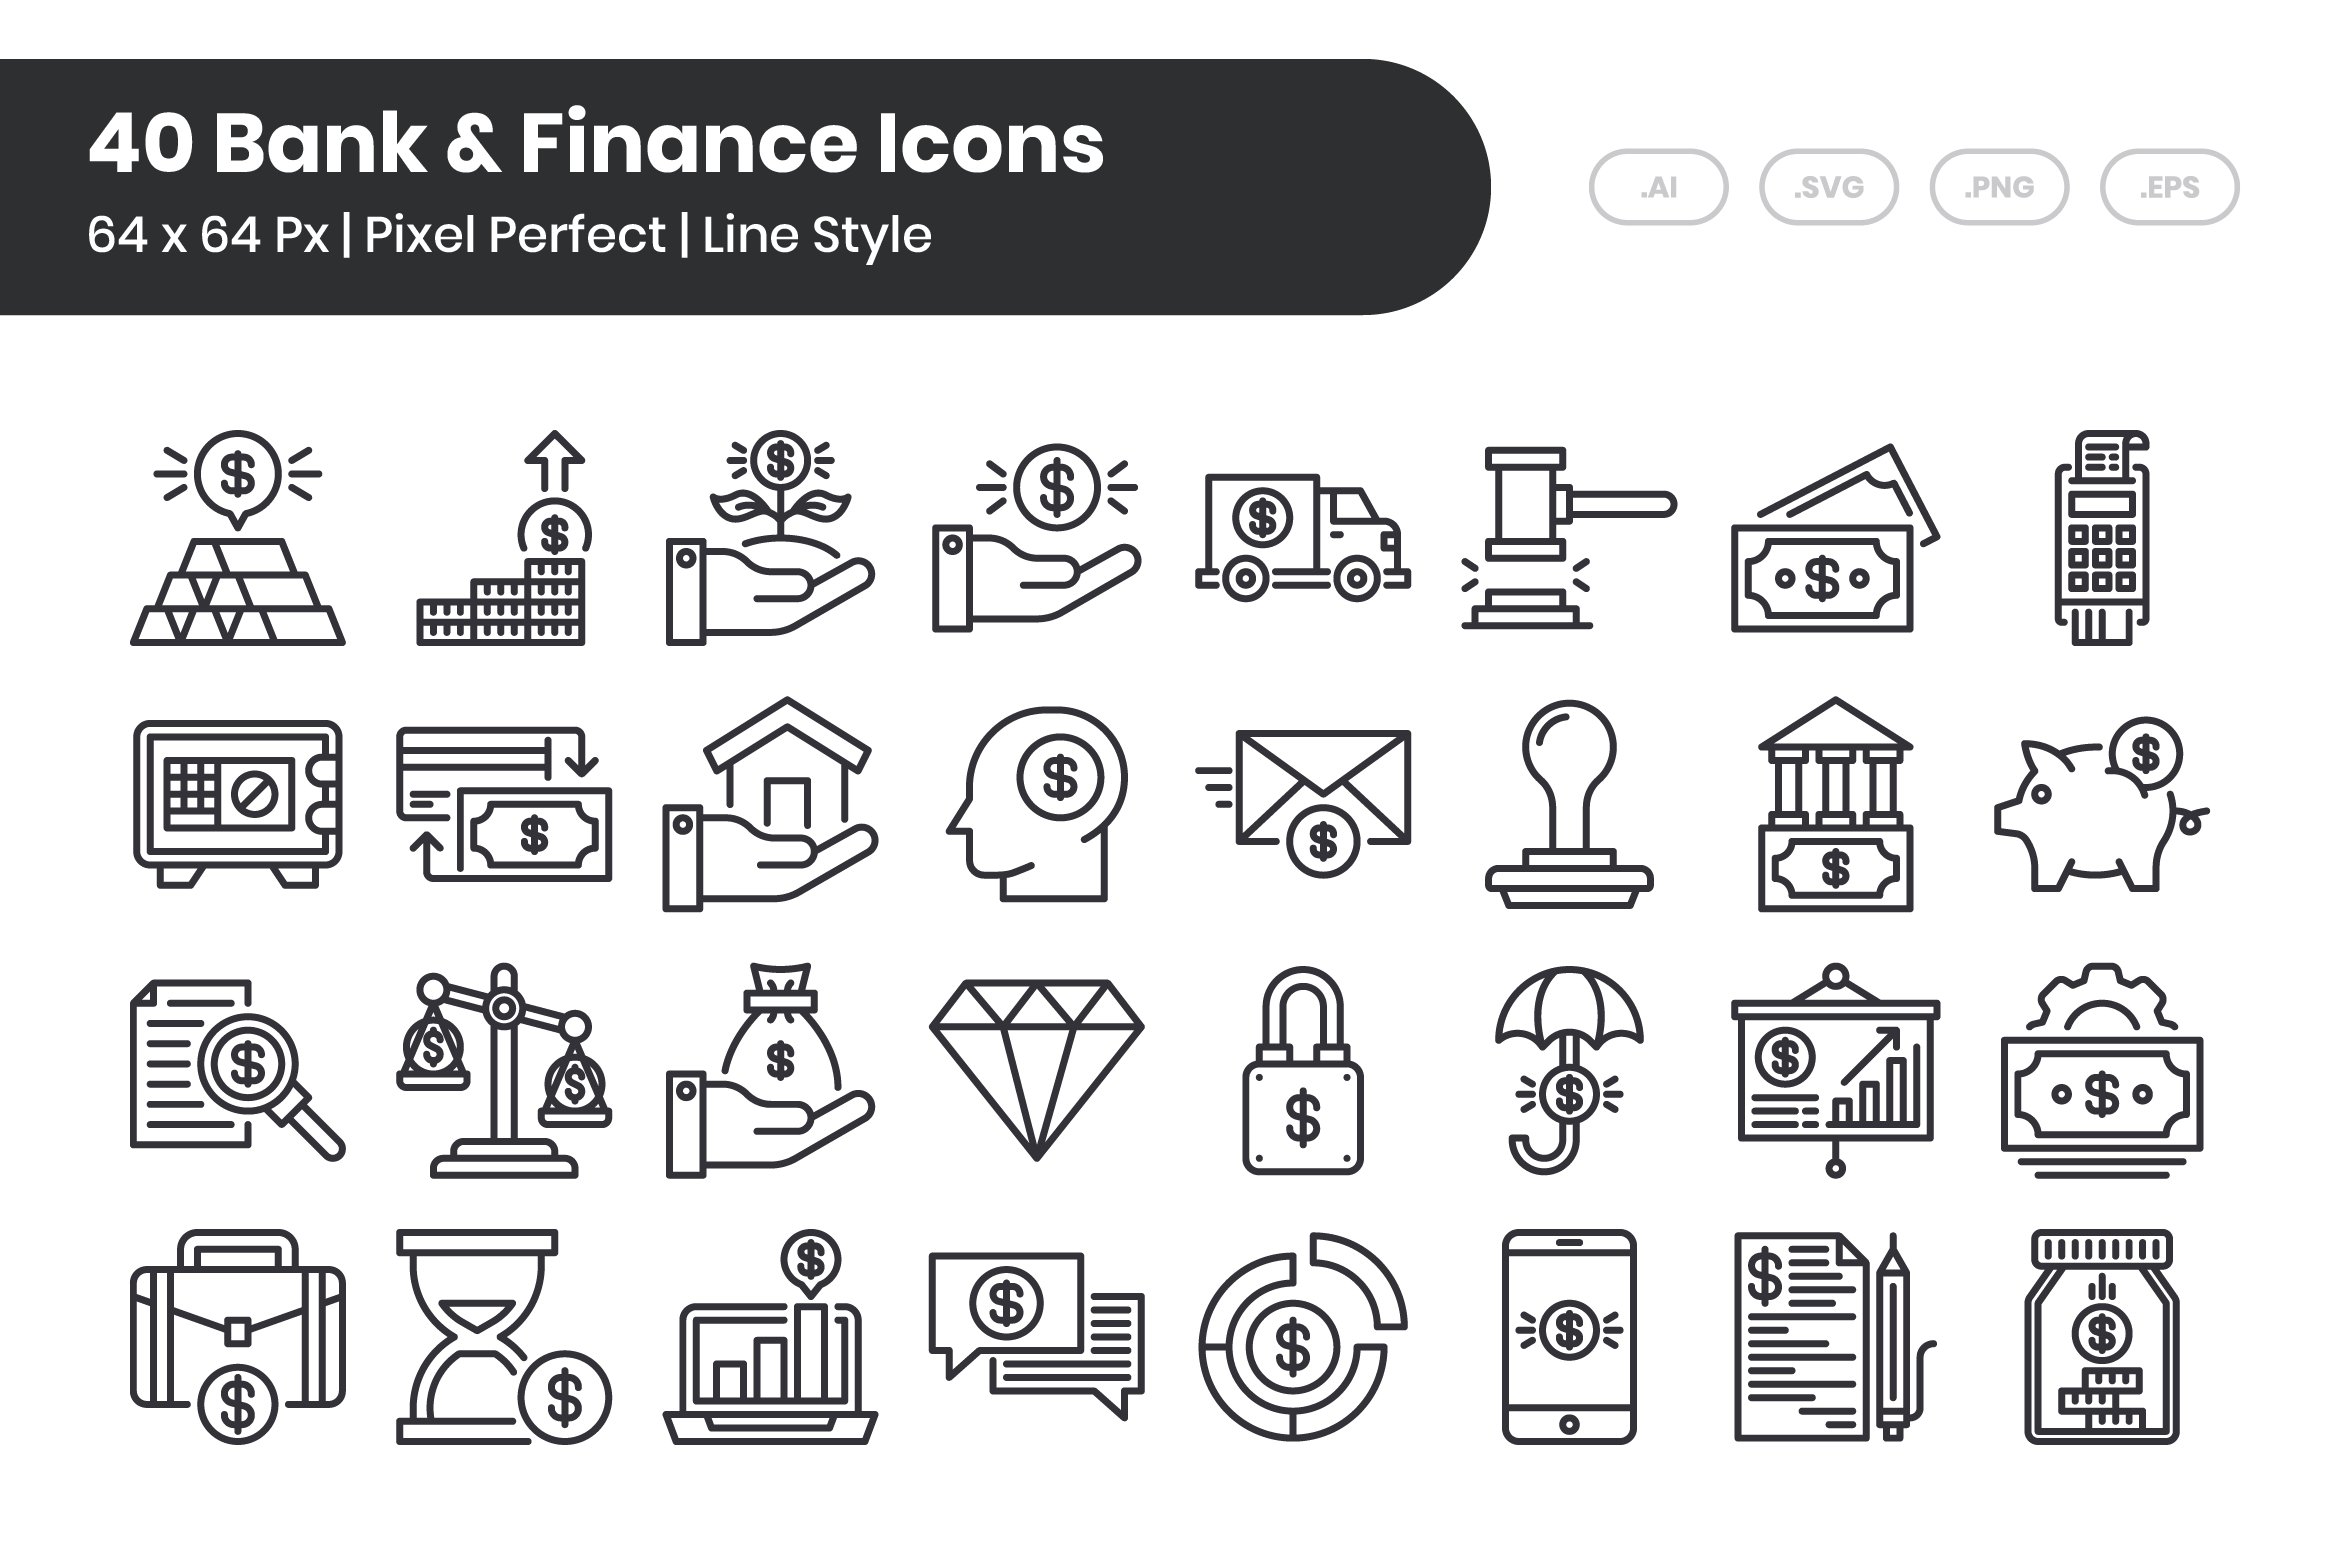 40 Bank & Finance - Line cover image.